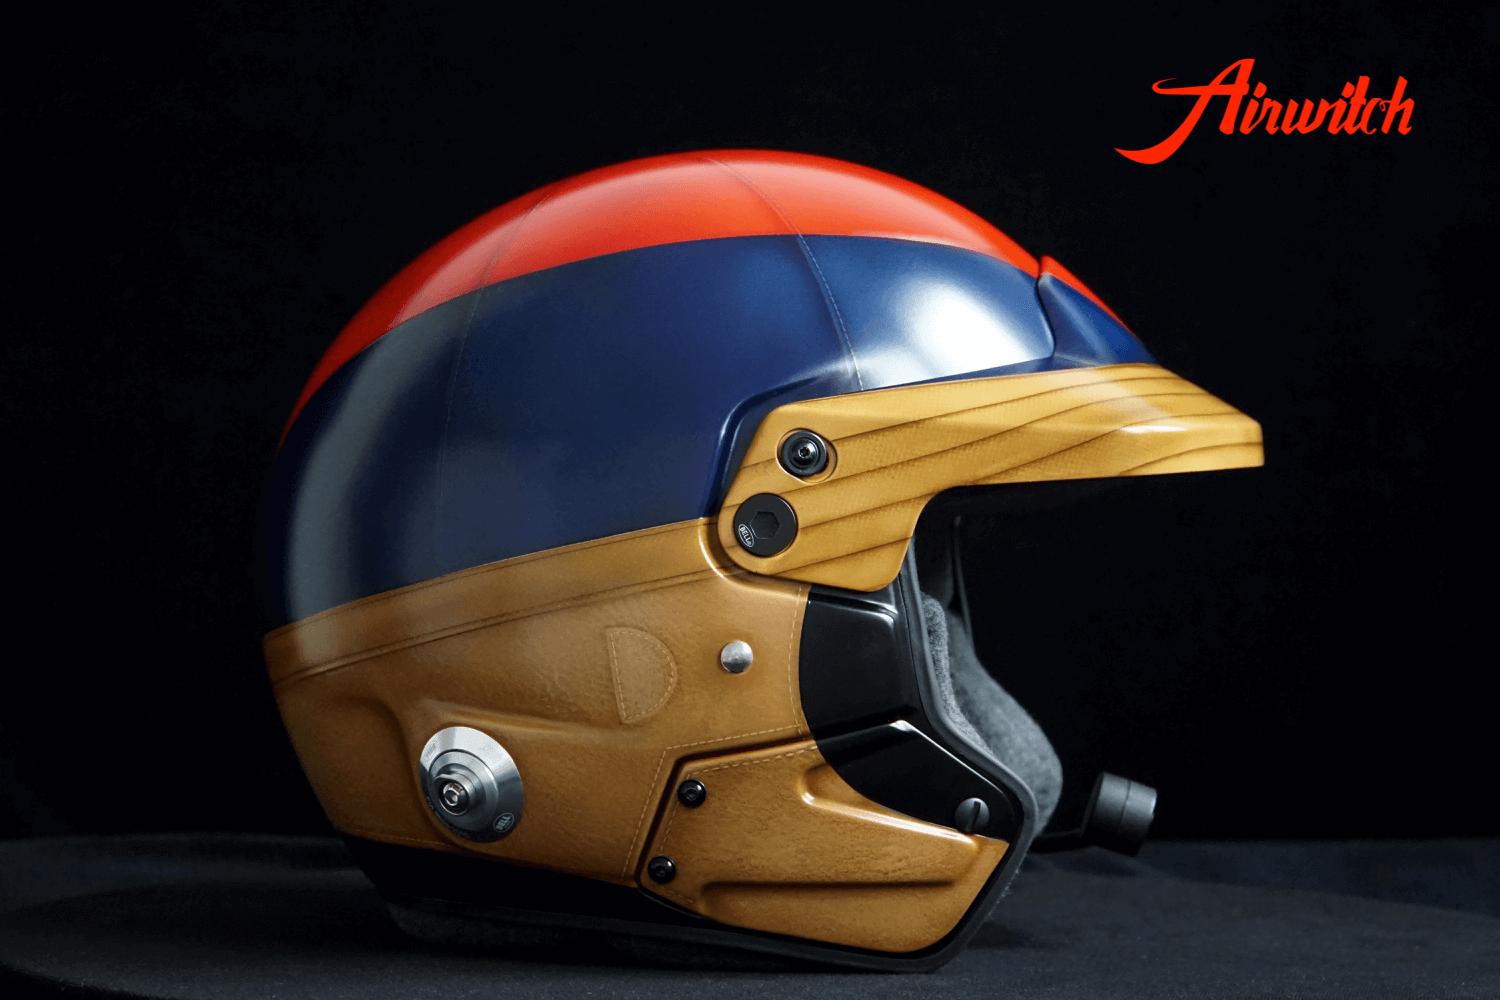 Custom paint old leather racing rallye helmet Mille Miglia Airbrush Lackierung in blau, rot und braun "1000 Miglia" Airwitch